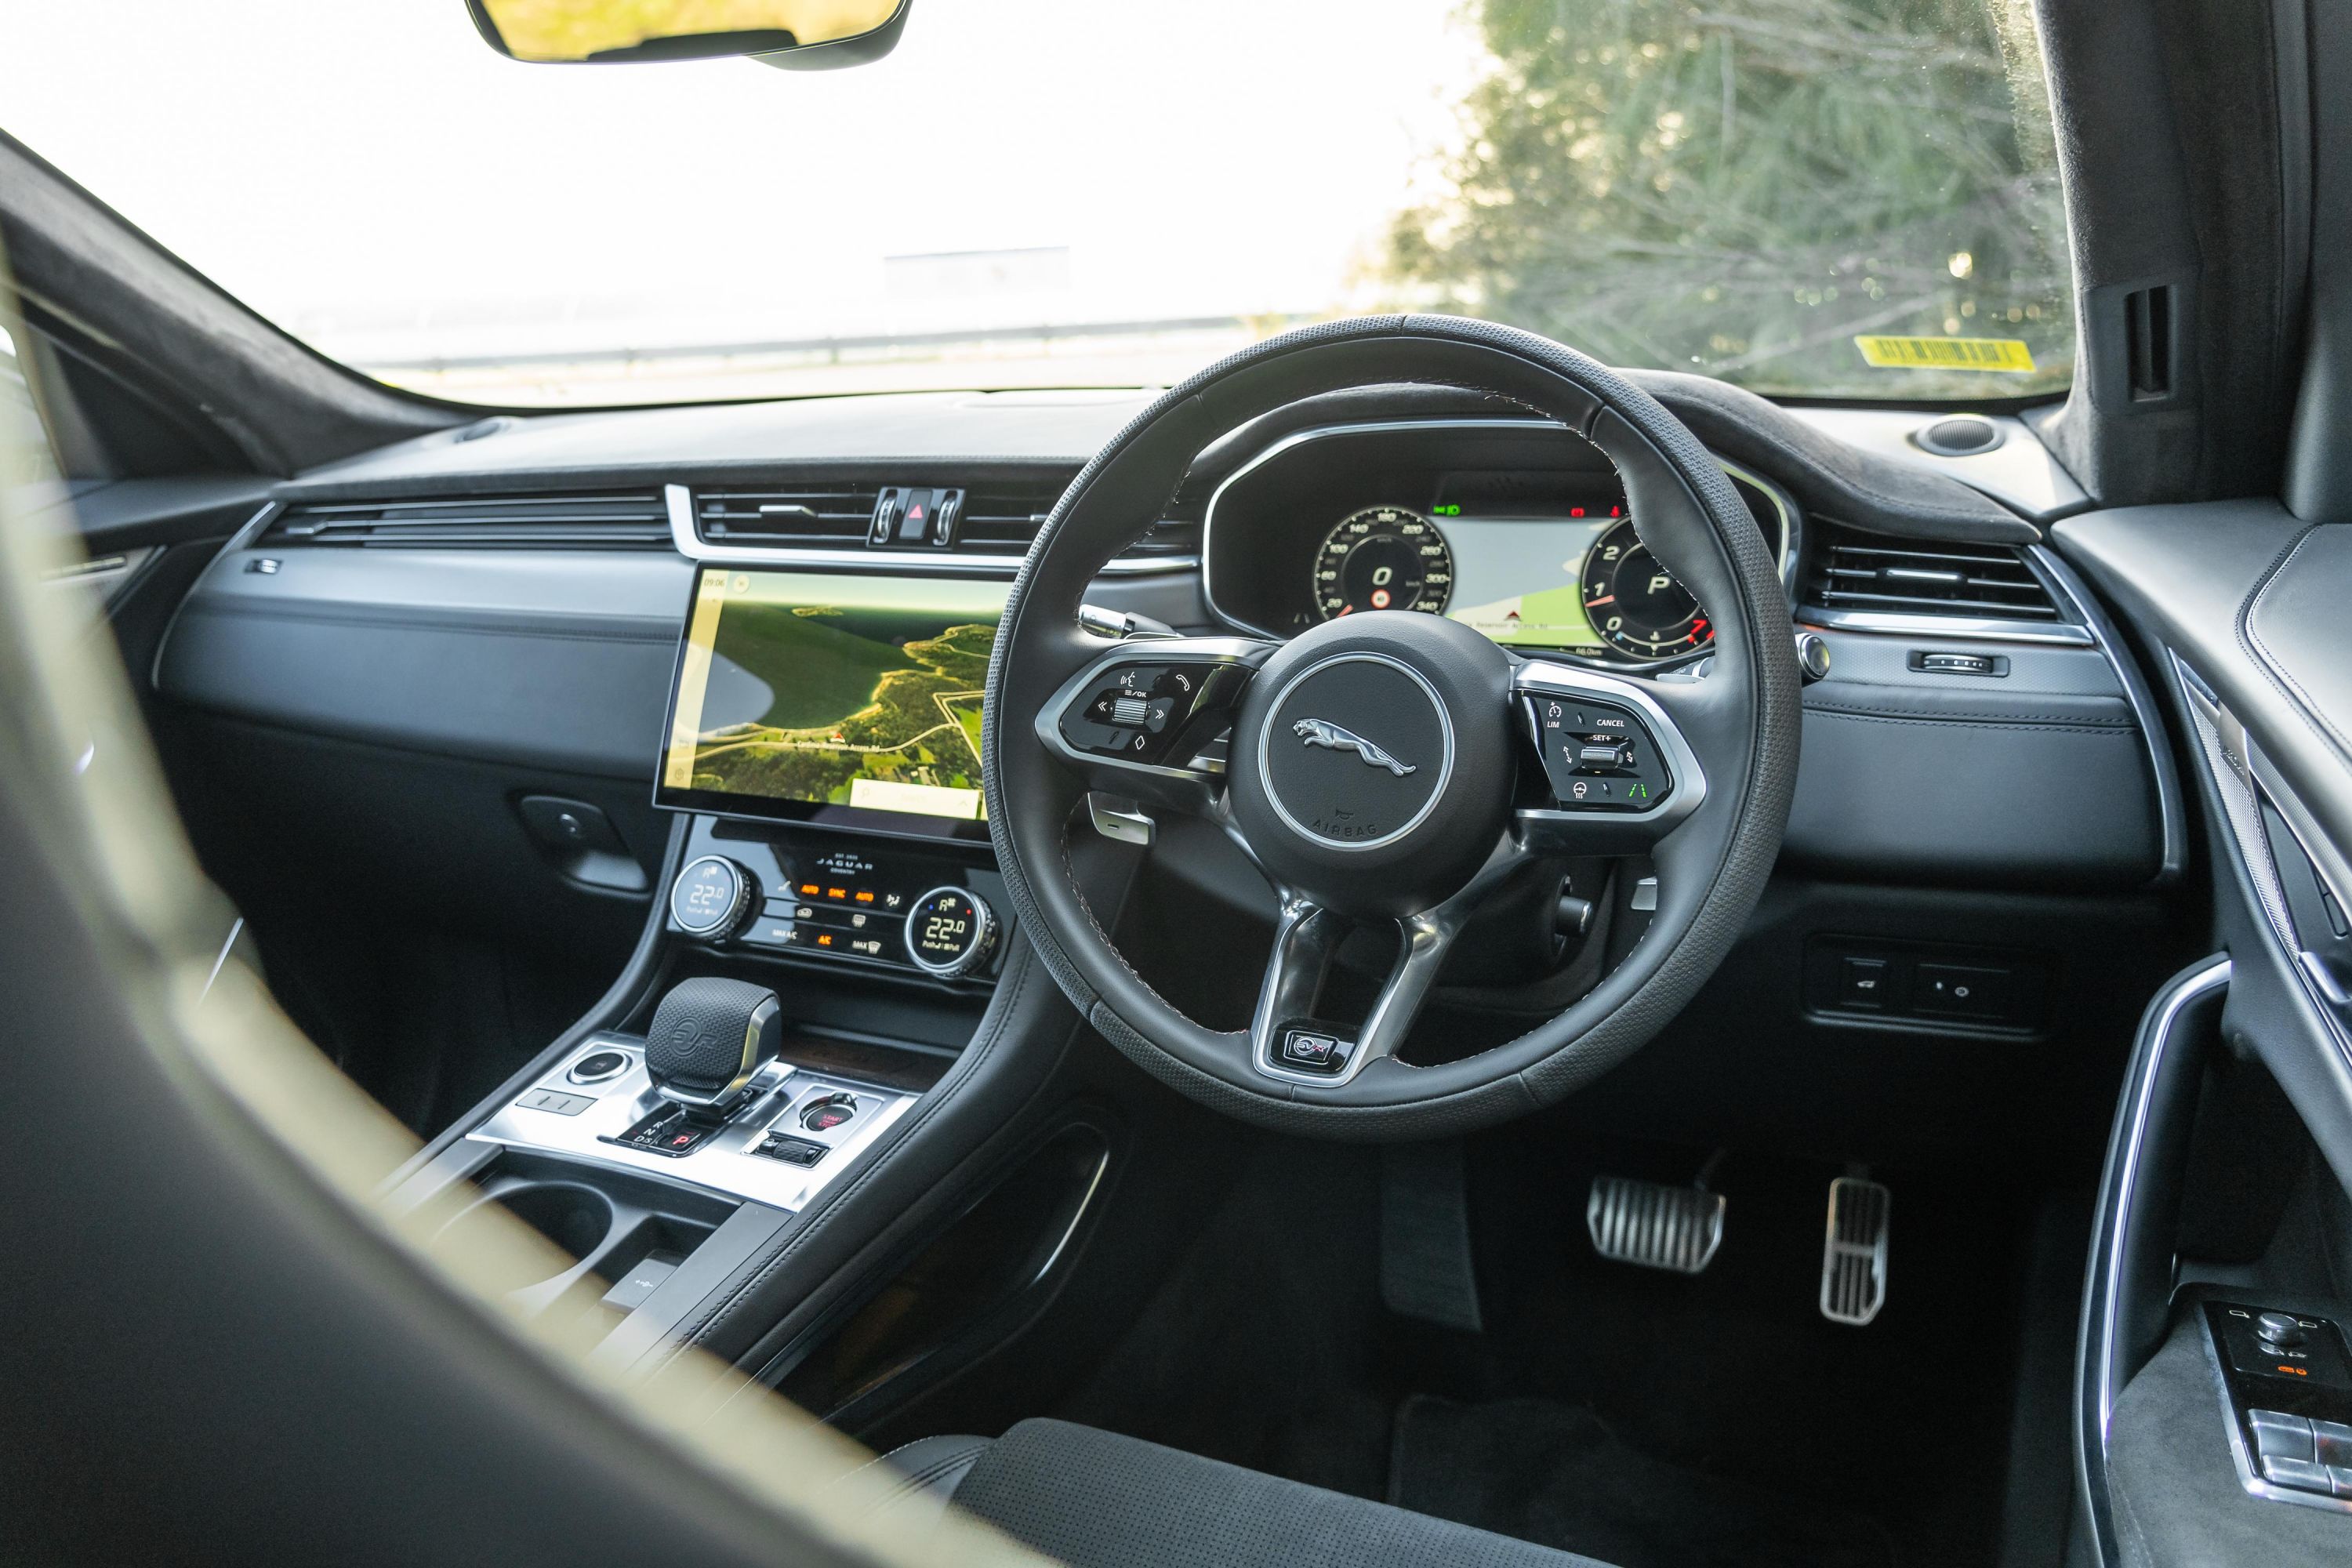 New-Hot-LIMITED-NEW-2014-Jaguar-XF-Interior-steering-wheel-On-Sport-Metal-Watch 